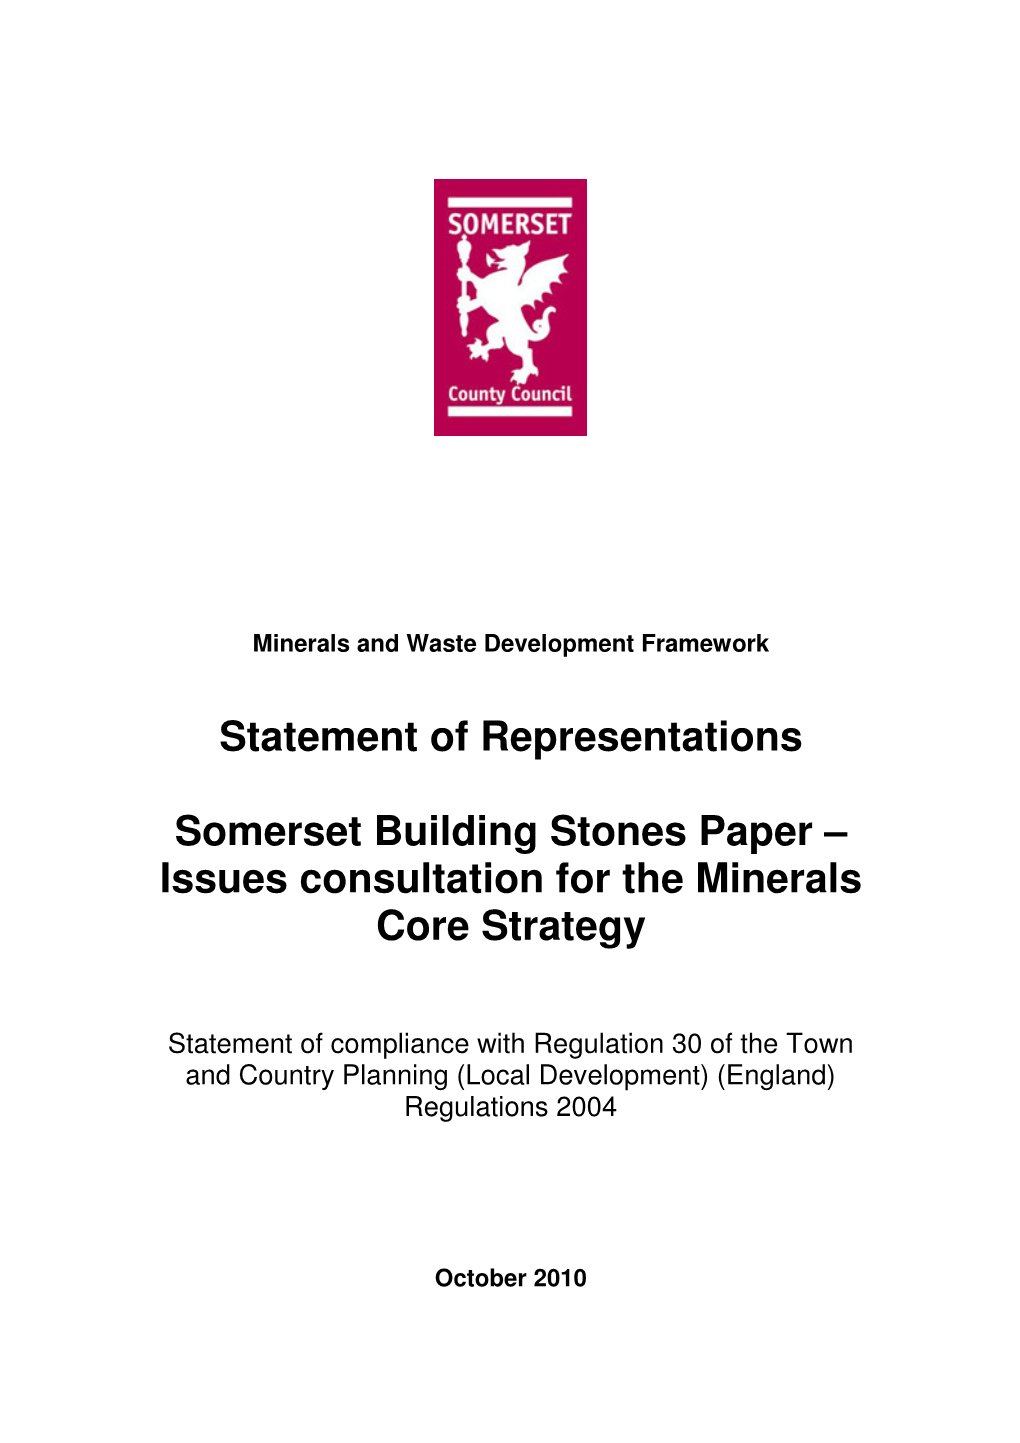 Statement of Representations Somerset Building Stones Paper